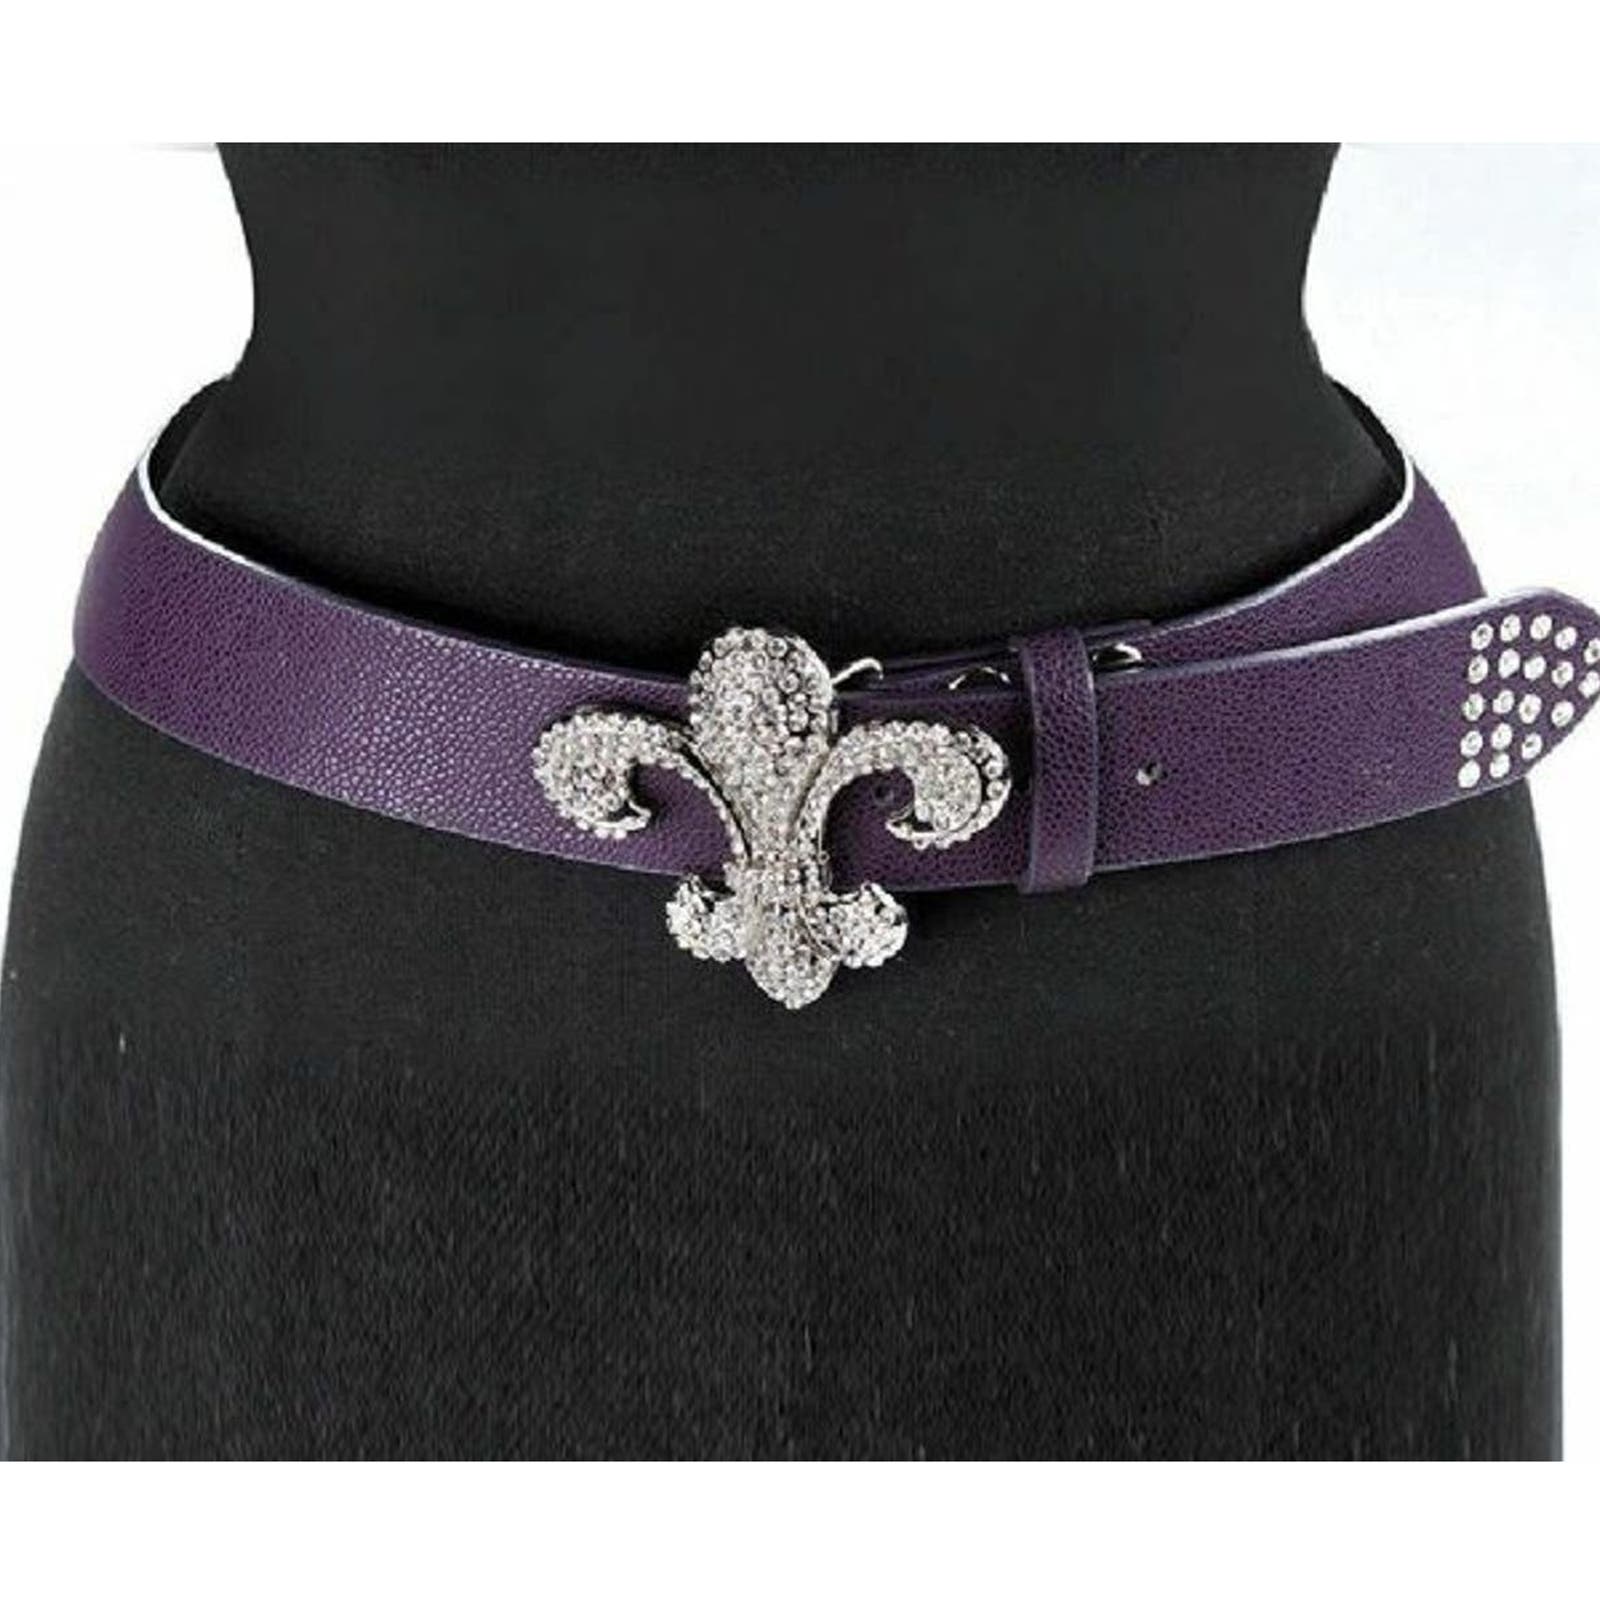 Fleur De Lis Purple Belt and Rhinestone Buckle  IOBOSP S/M Fits 30-36"  NEW